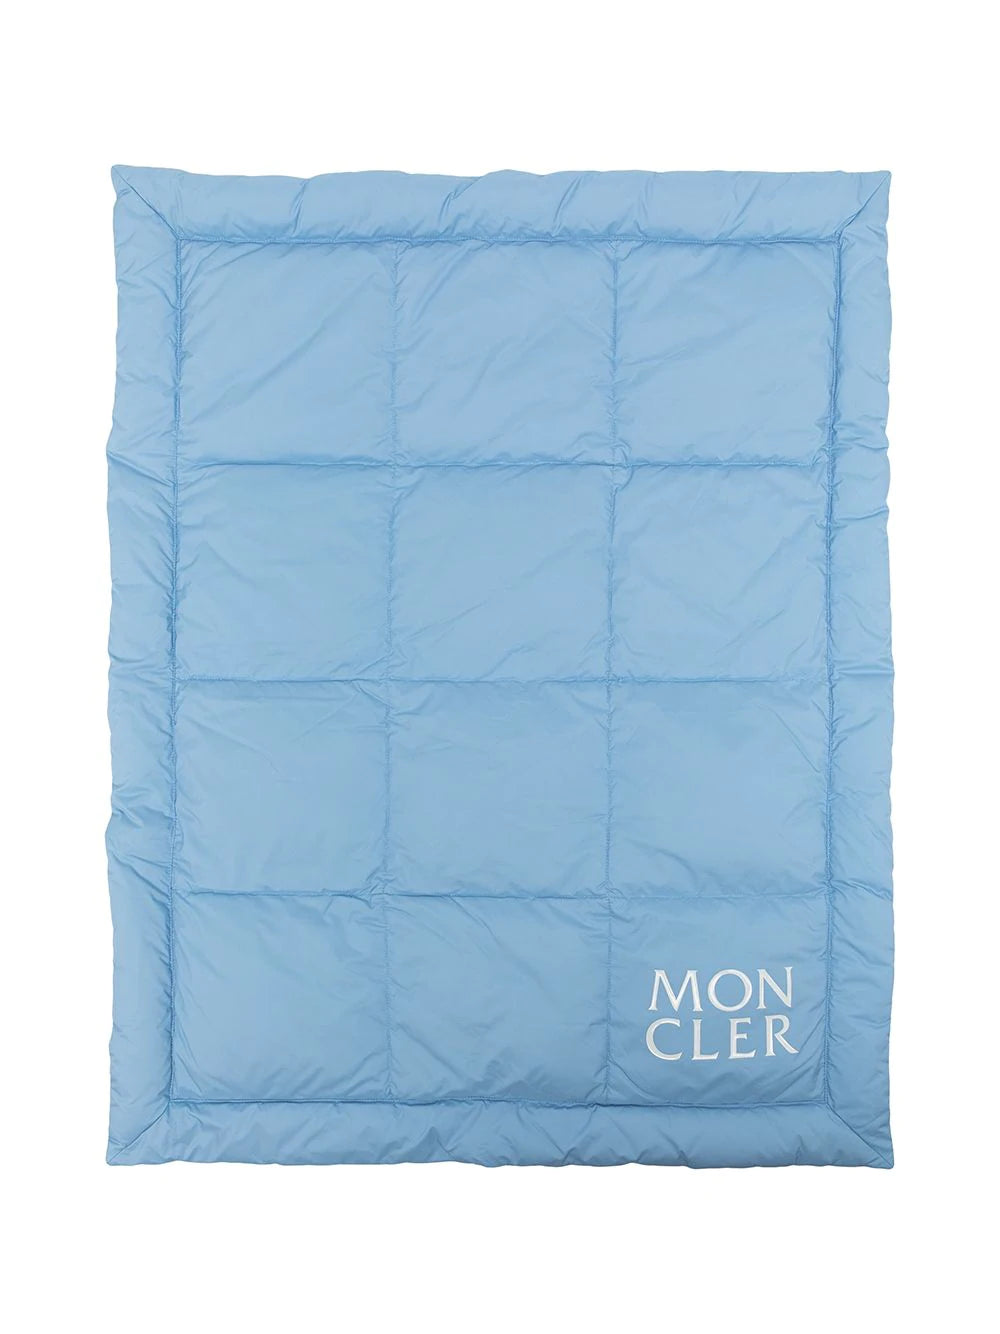 Moncler Baby Blanket